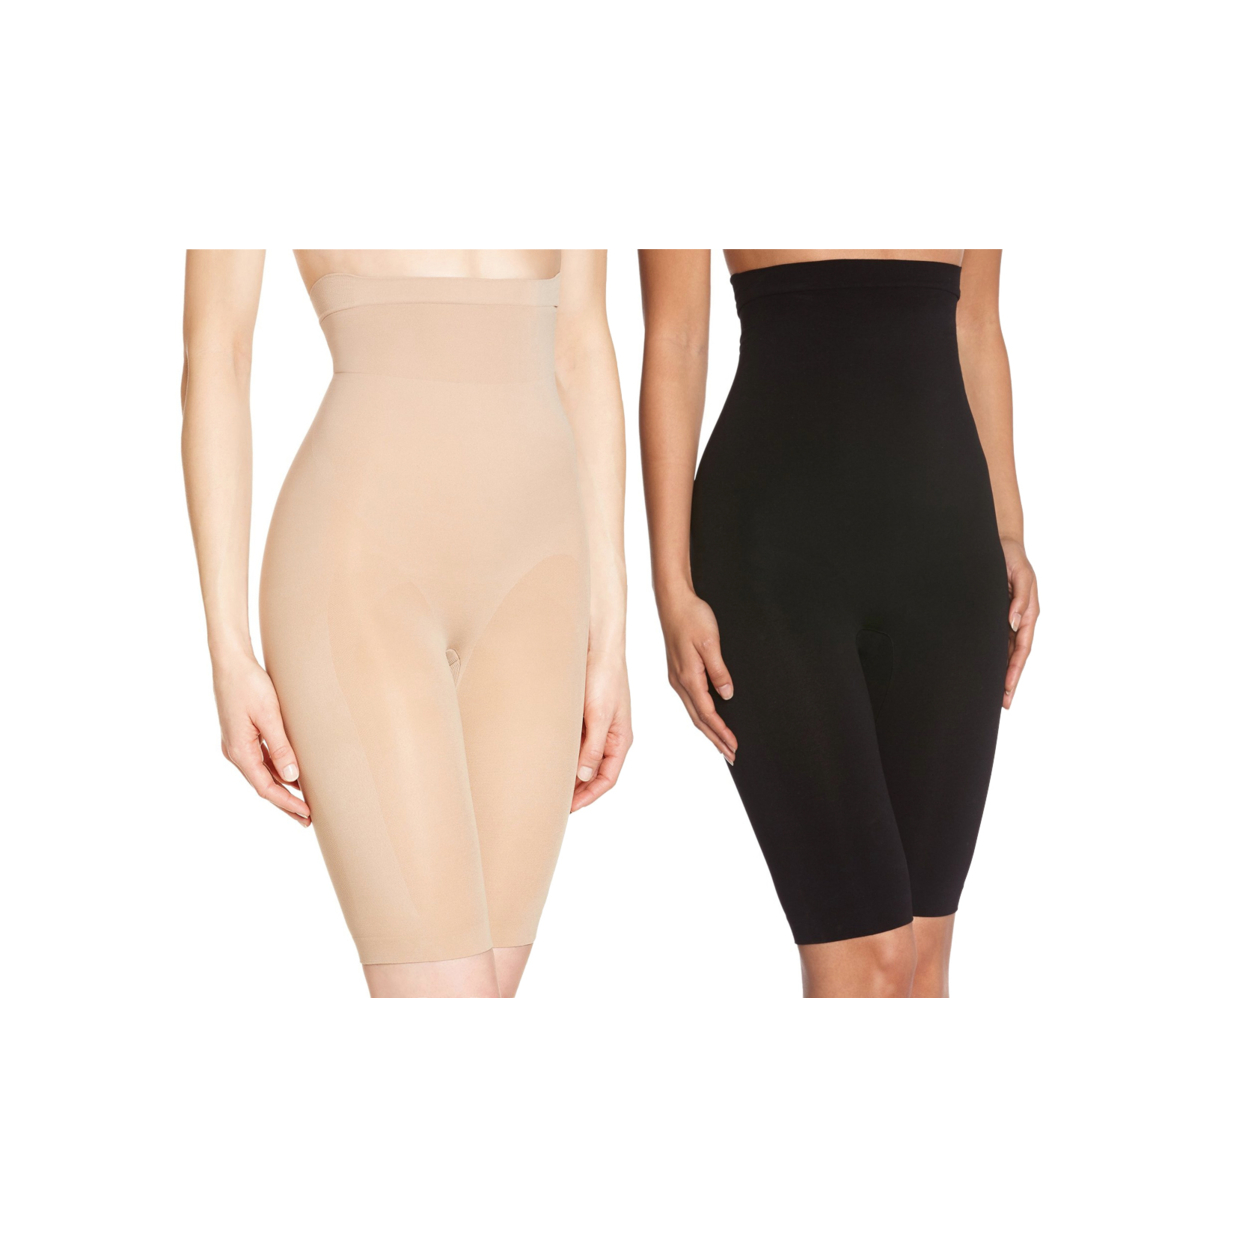 2 Pack Of Women's Long Leg Waist Control Body Shaper - Beige & Black, L/XL